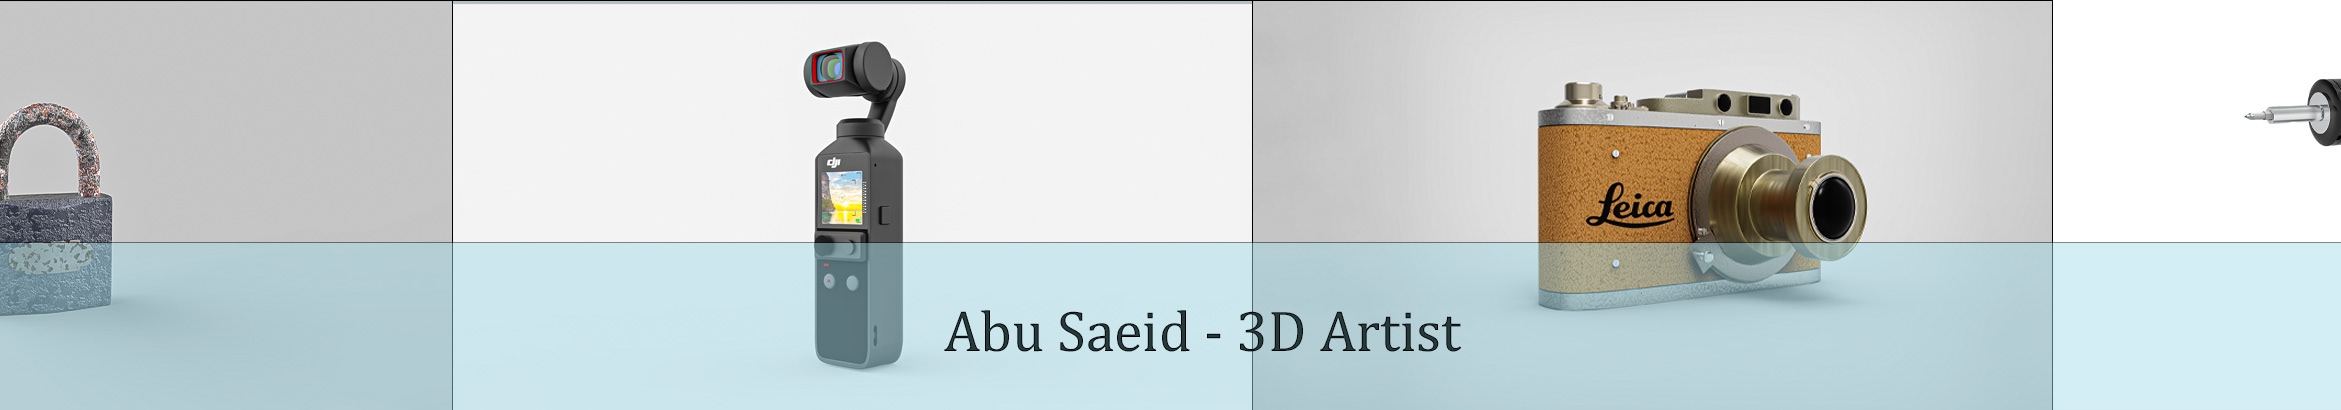 Banner de perfil de Abu Saeid